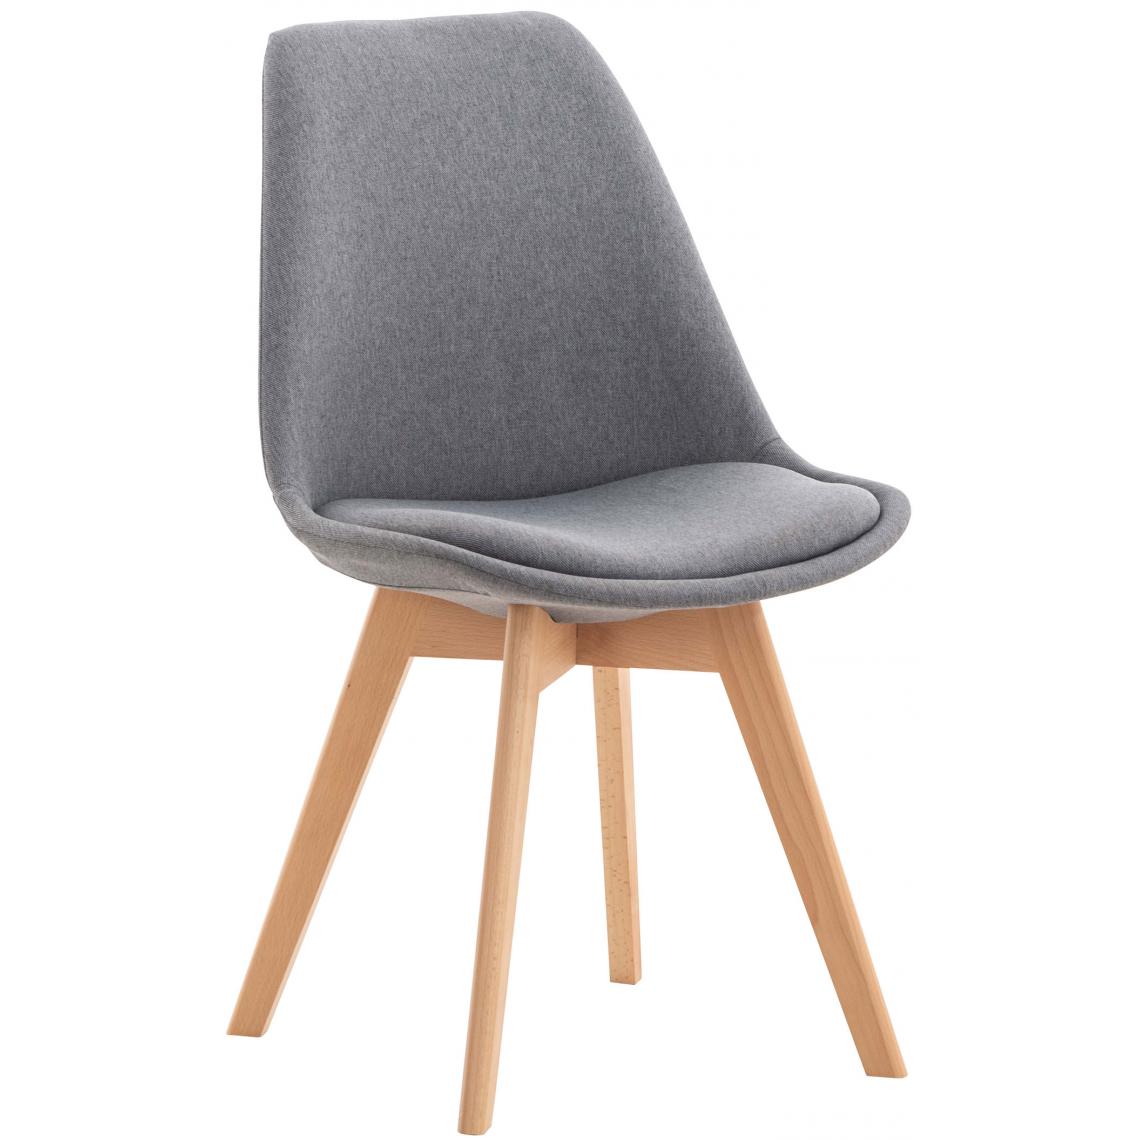 Icaverne - Splendide Chaise en tissu collection Oulan-Bator couleur gris clair - Chaises